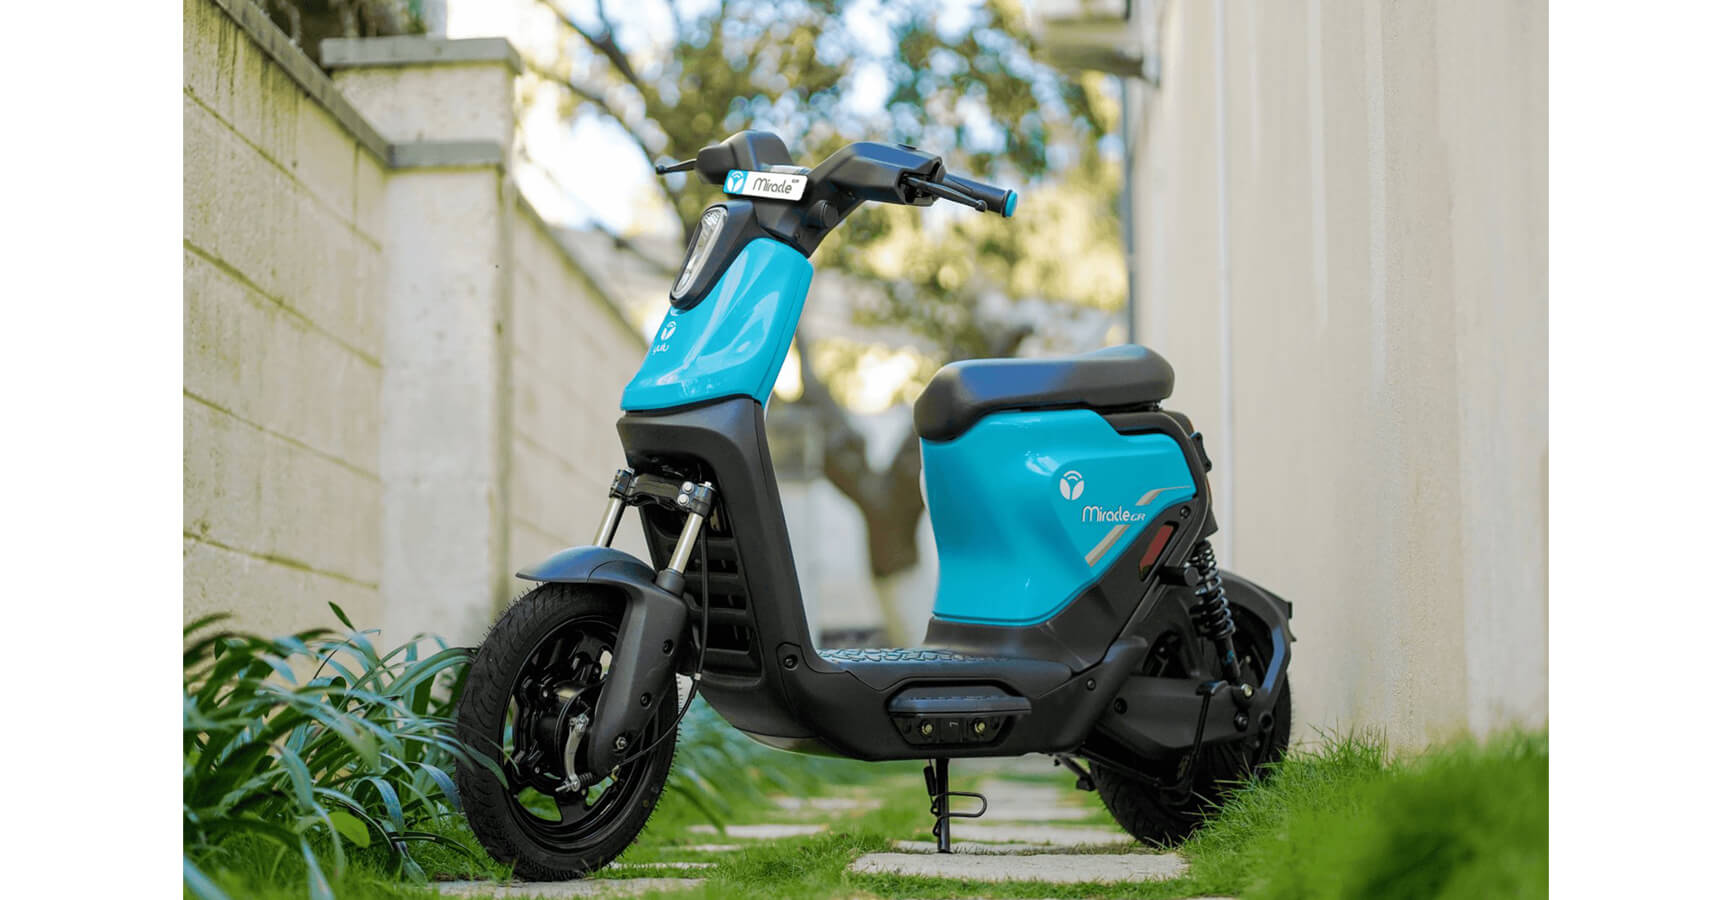 Bajaj Auto & Yulu Launch E-Scooters